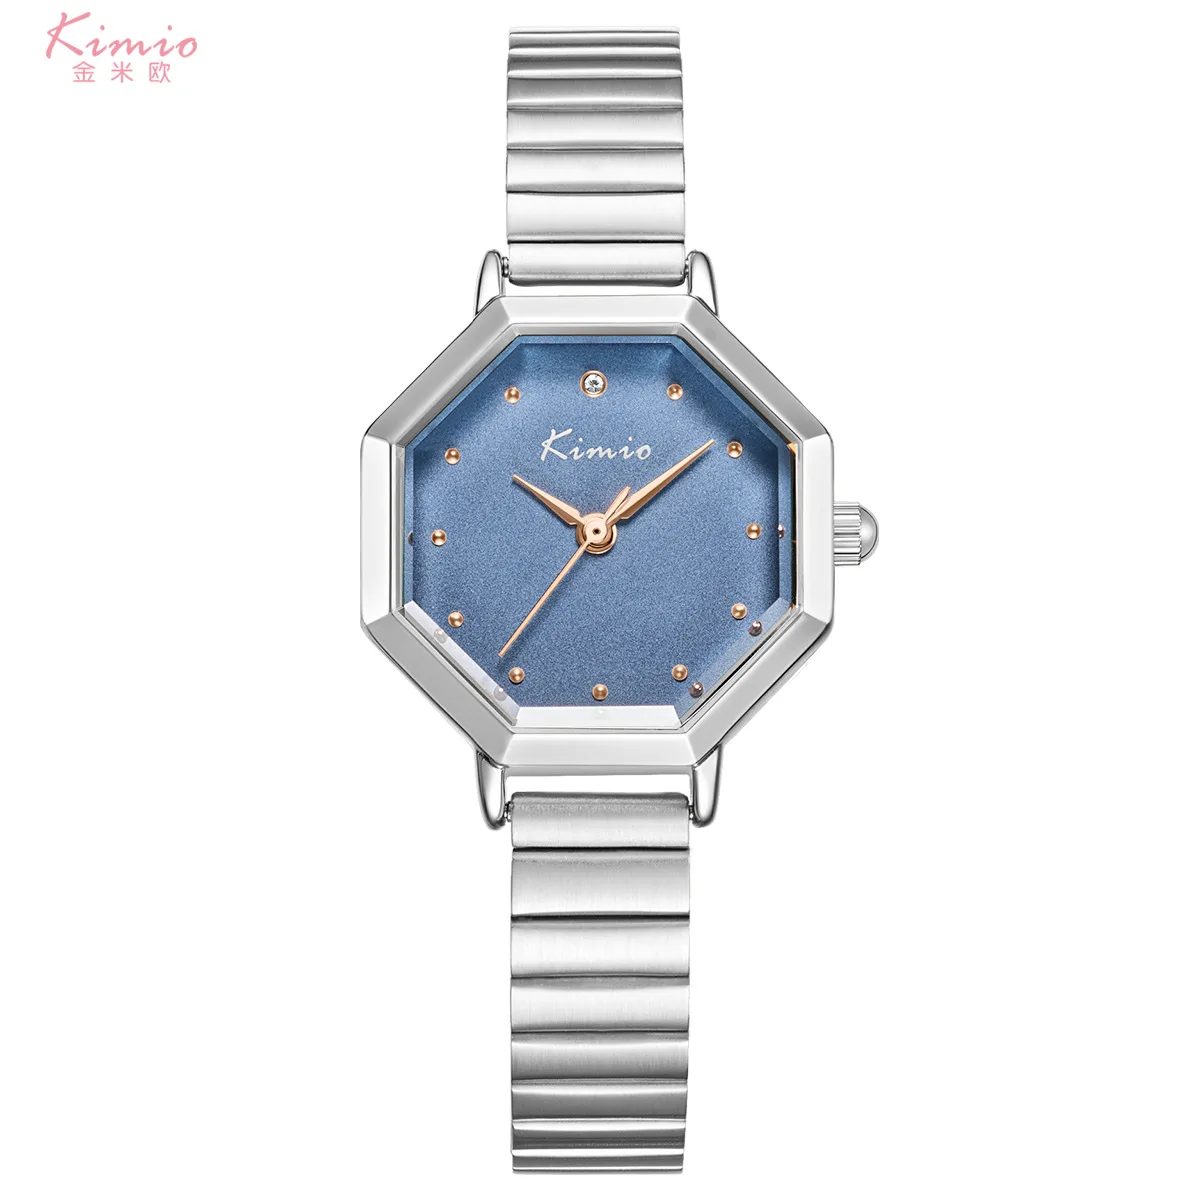 ORSGA SAFFIRE Blue Dial Rose Gold Watch